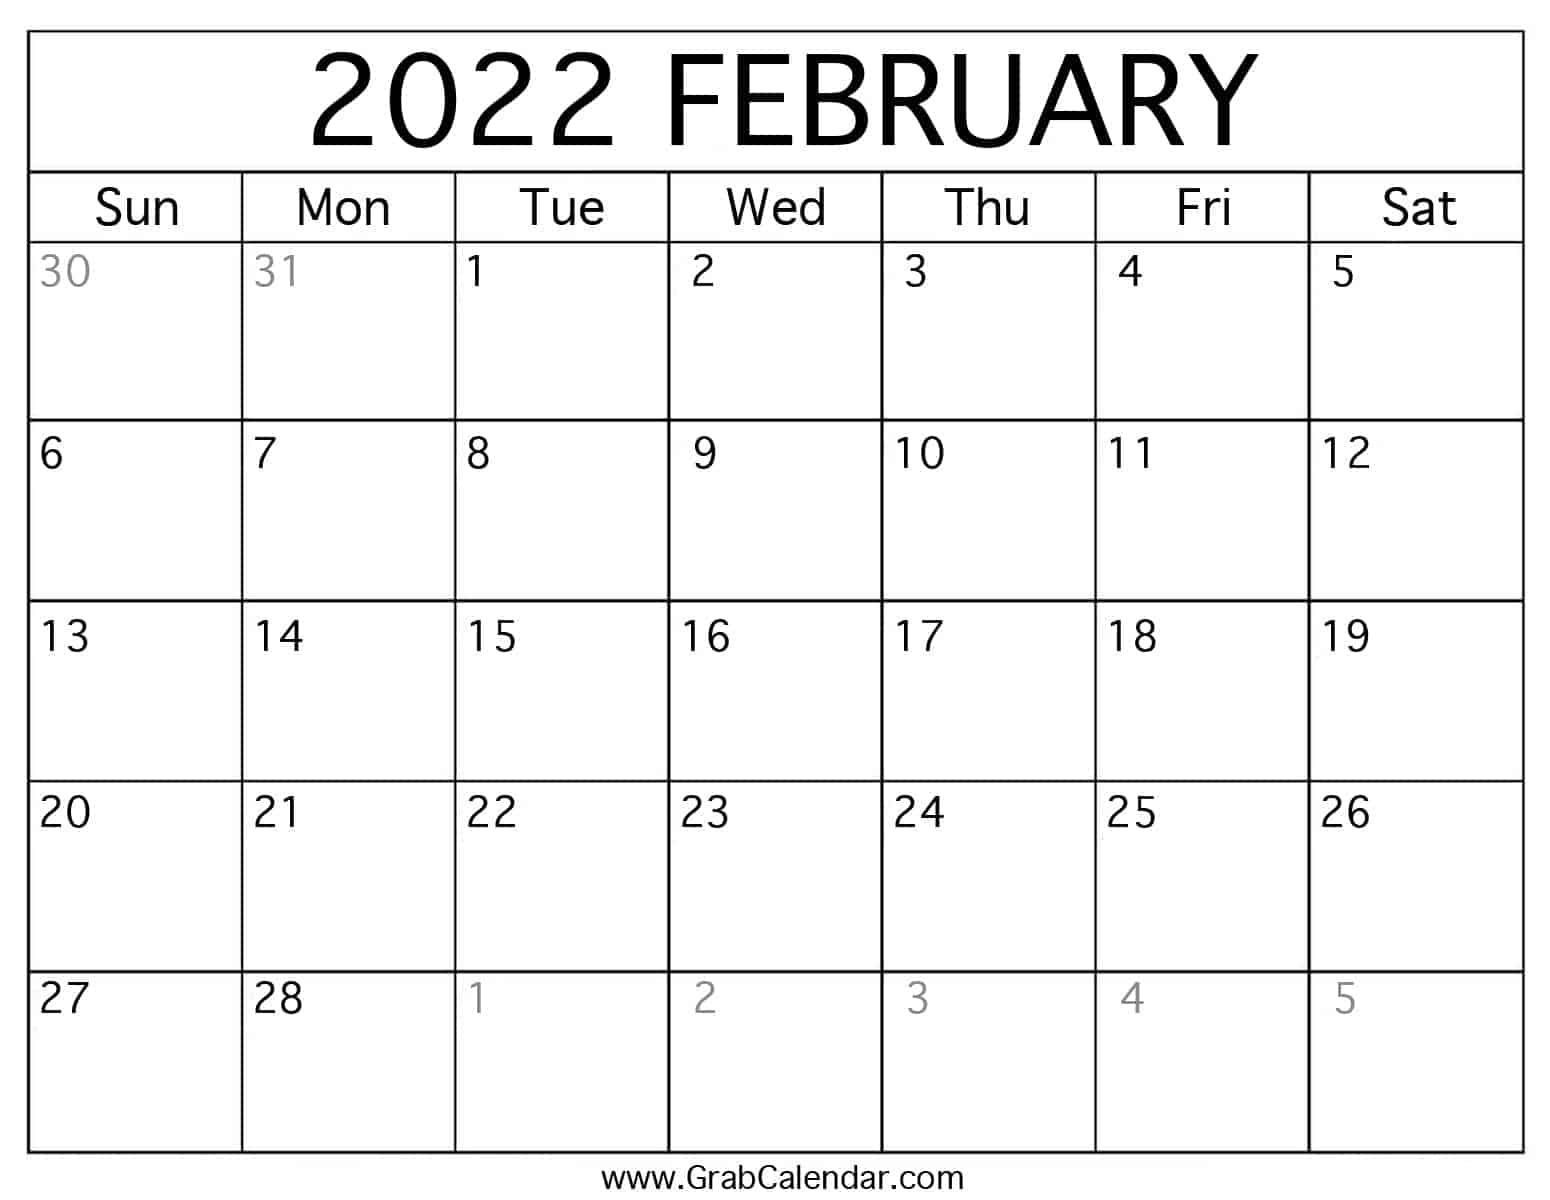 February 2022 Blank Calendar Printable February 2022 Calendar